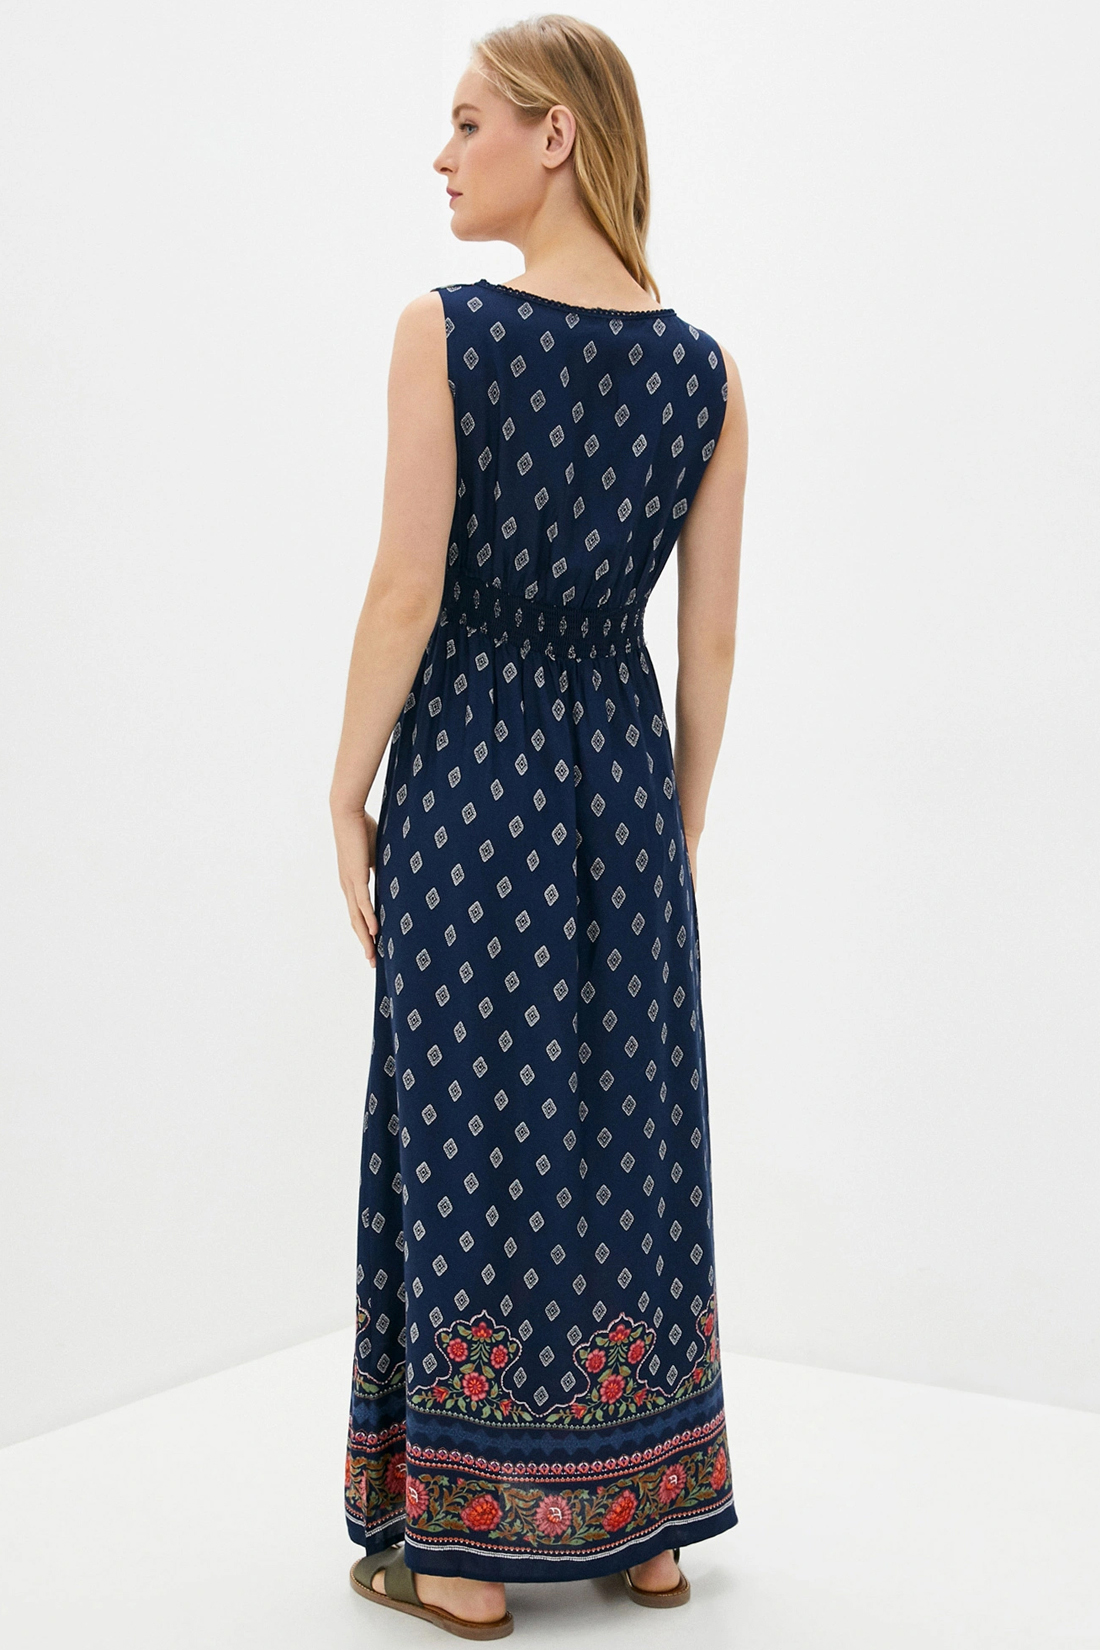 Платье (арт. baon B450100), размер XXL, цвет dark navy printed#синий Платье (арт. baon B450100) - фото 2